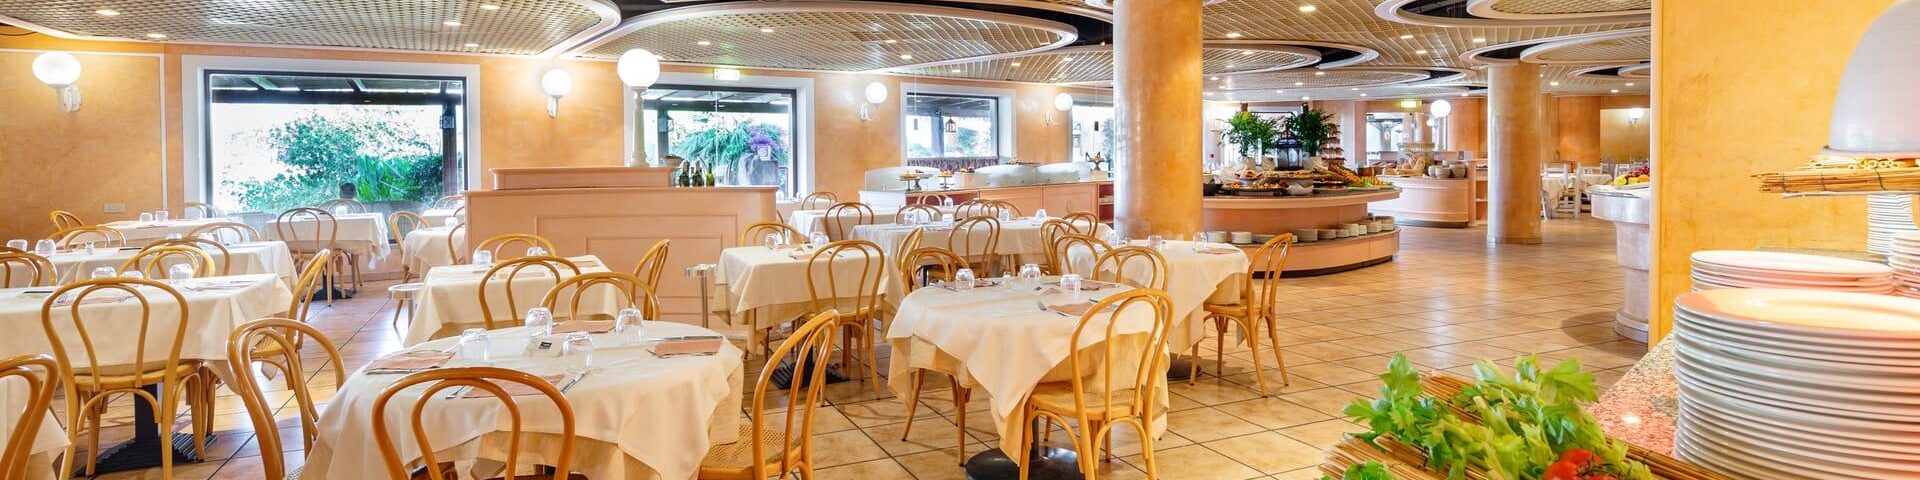 sant_elmo_beach_hotel_restaurant_ristorante_costa_rei